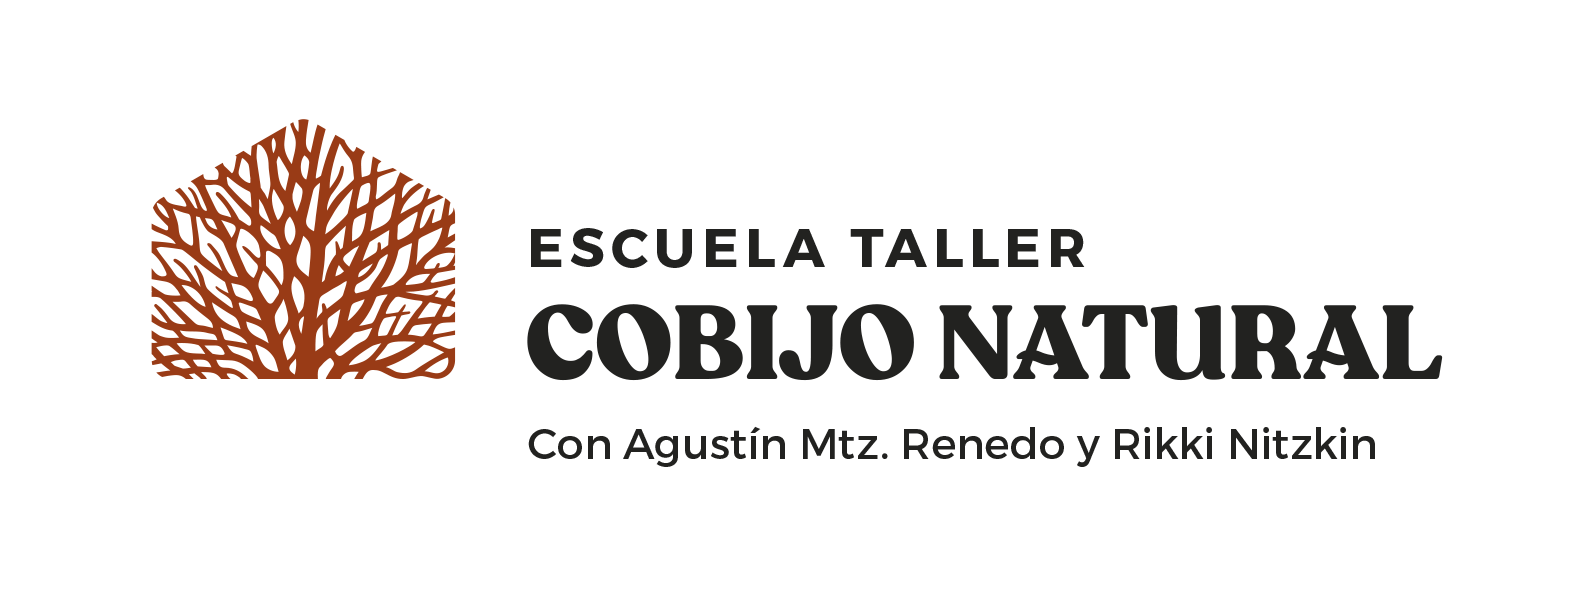 Escuela Taller Cobijo Natural